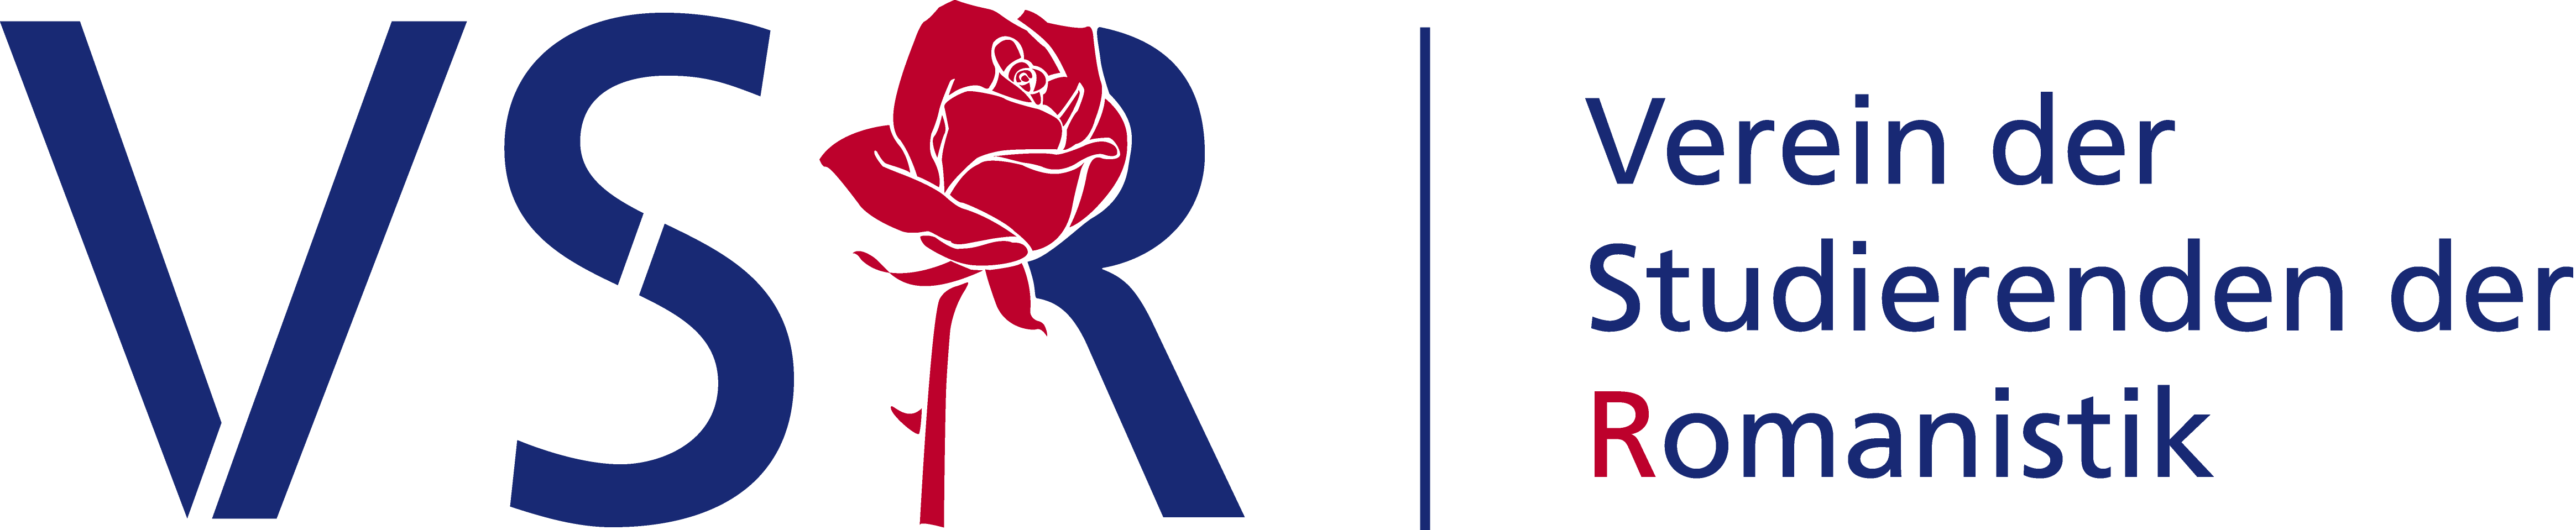 VSR_Logo